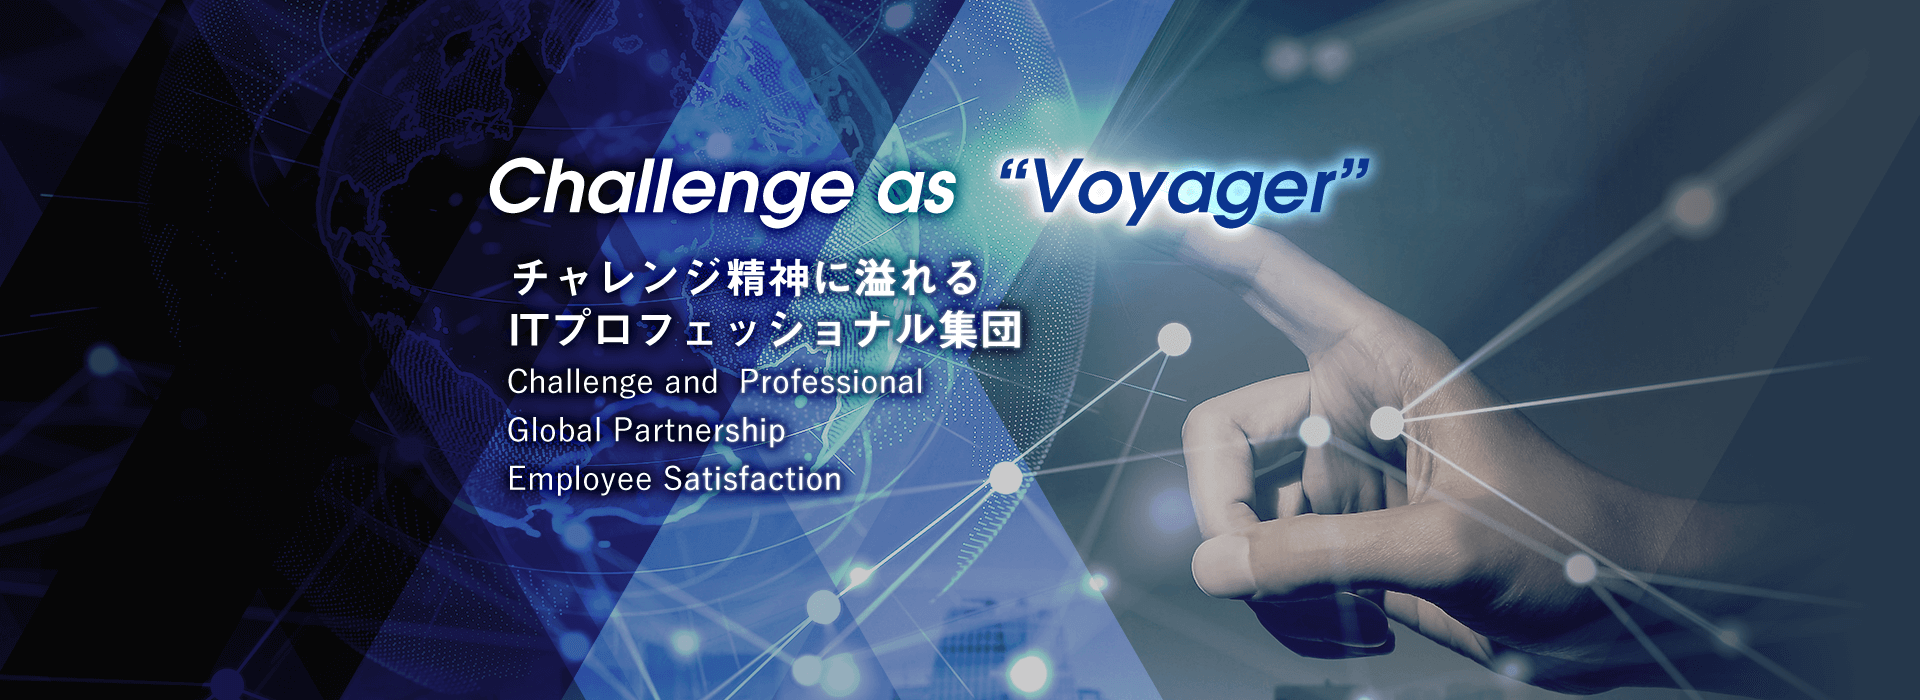 Challenge as “Voyager” チャレンジ精神に溢れるITプロフェッショナル集団 Challenge and  Professional　Global Partnership Employee Satisfaction